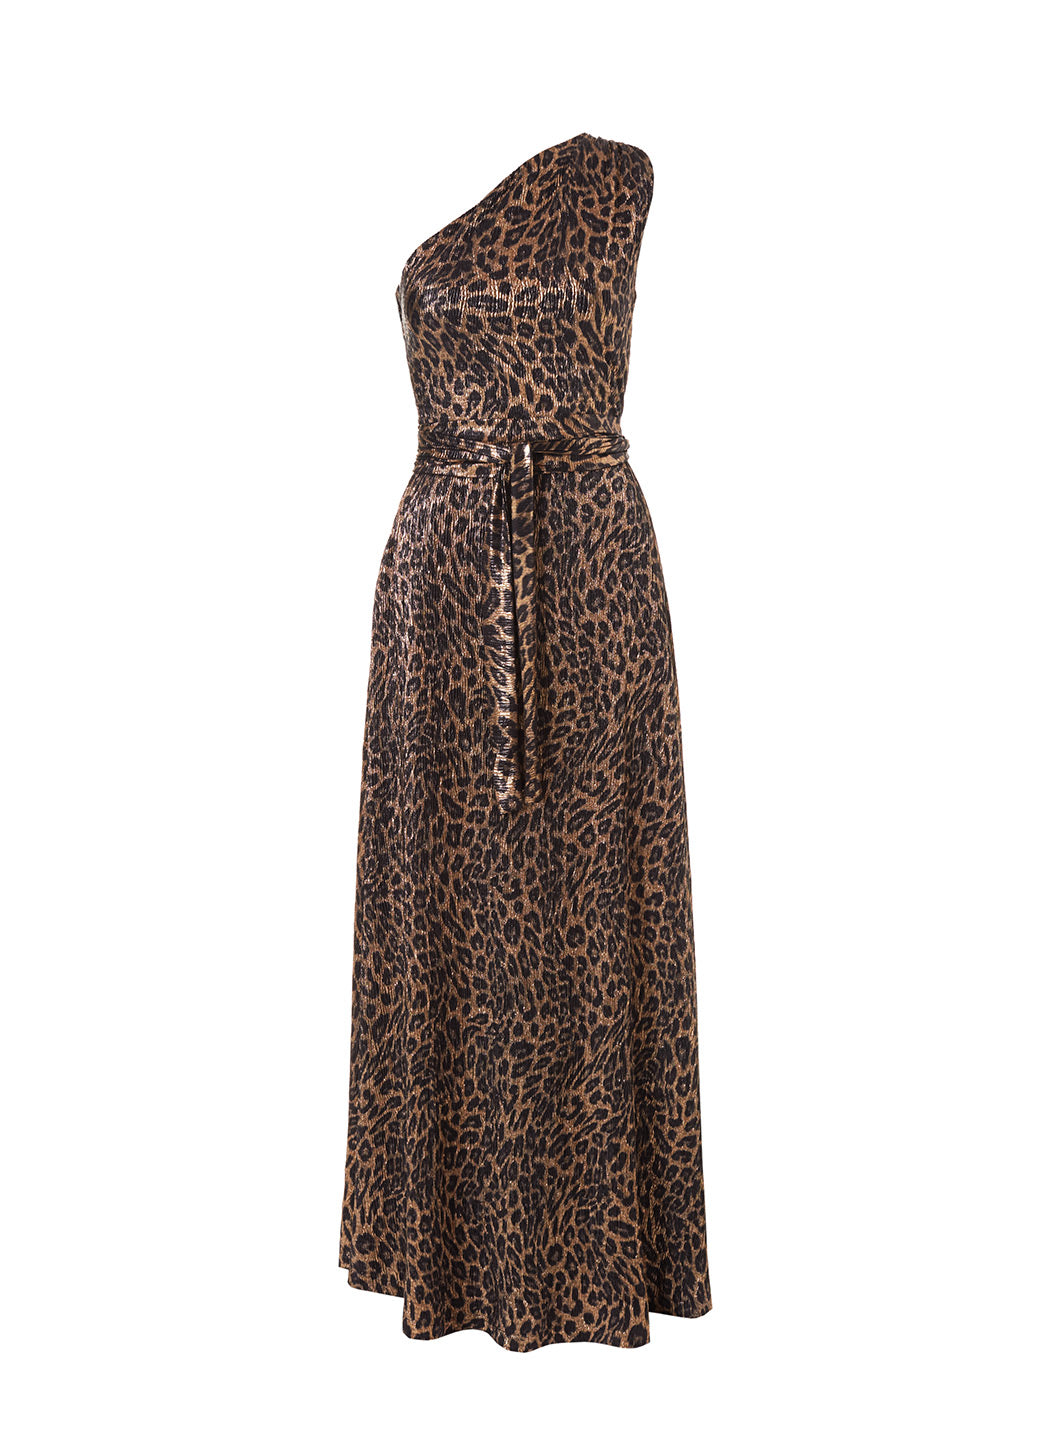 Look 2 One Shoulder Draped Maxi Dress Leopard - FINAL SALE